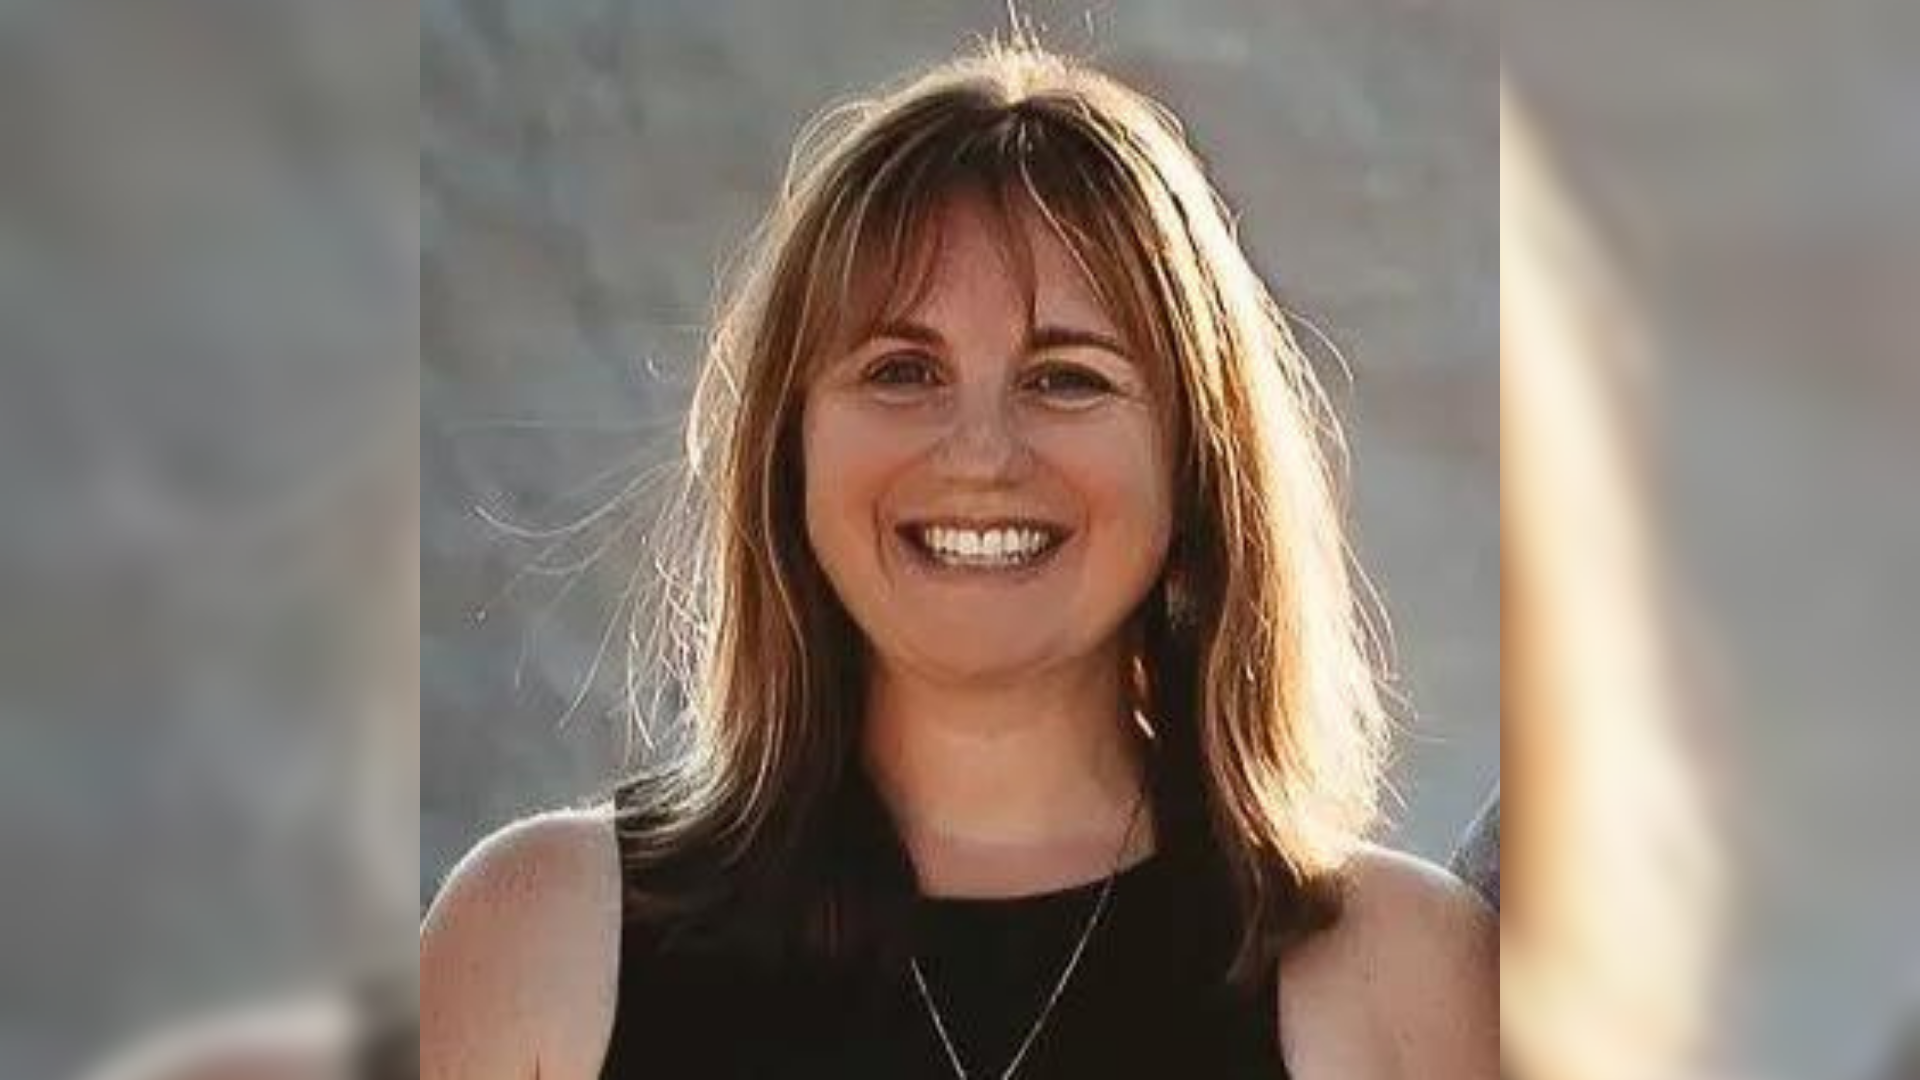 Colorado Governor Appoints CMU's Melissa Calhoon to Community Service Board